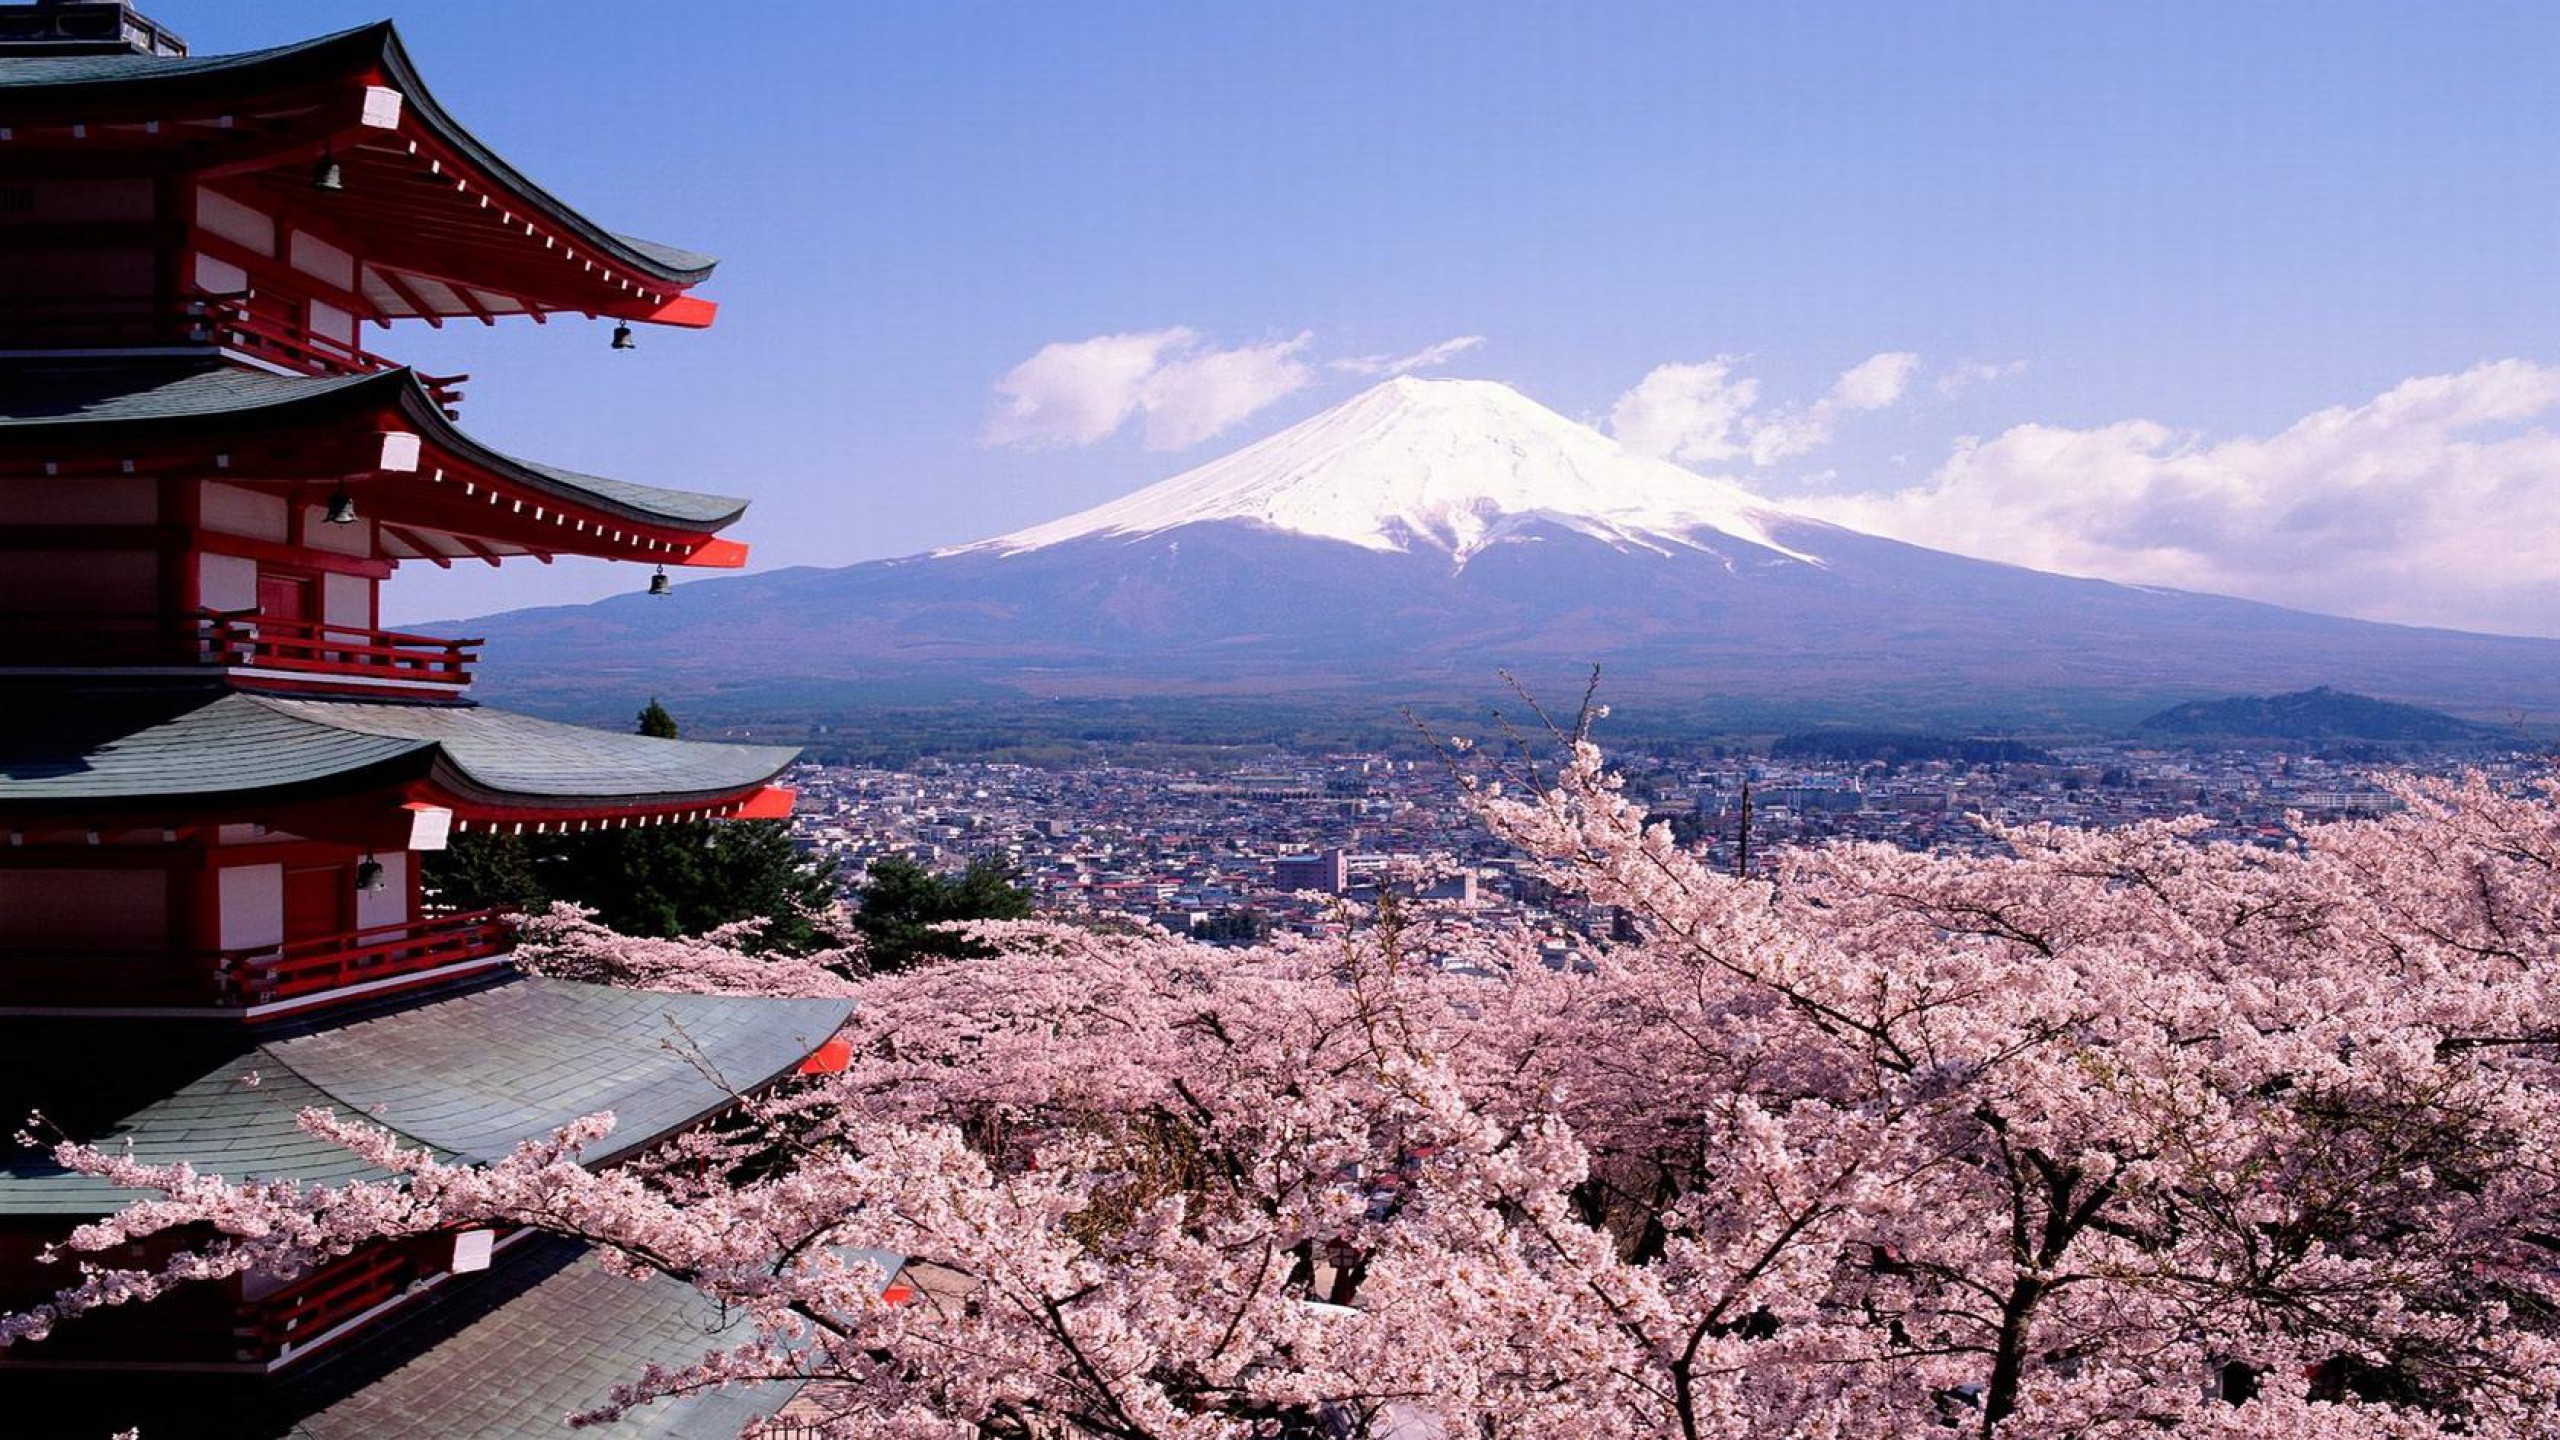 2560x1440 Mount Fuji Japan Wallpaper